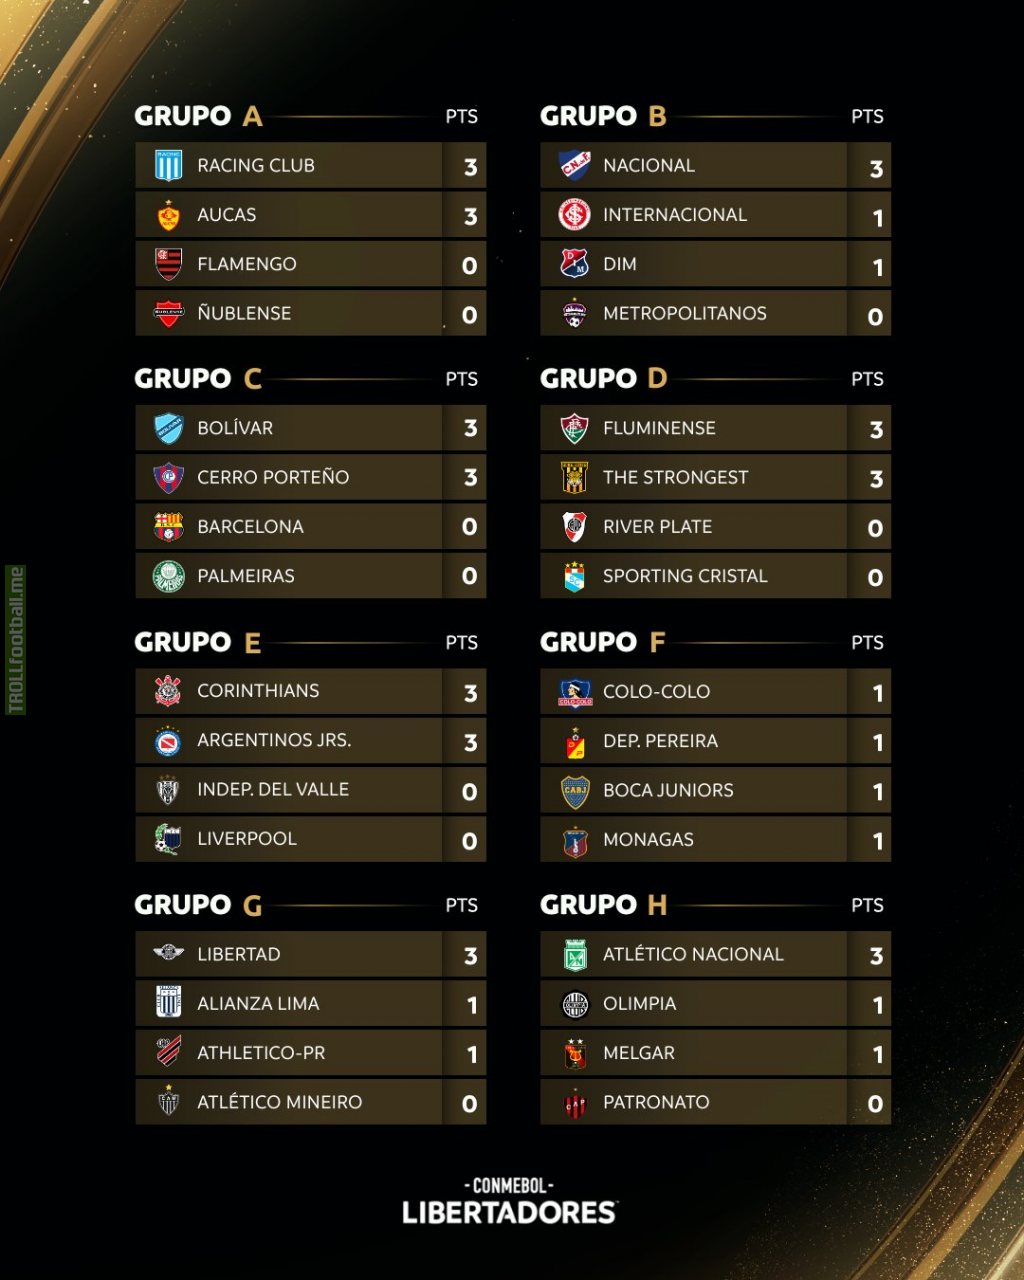 Copa Libertadores groups after match day 1.